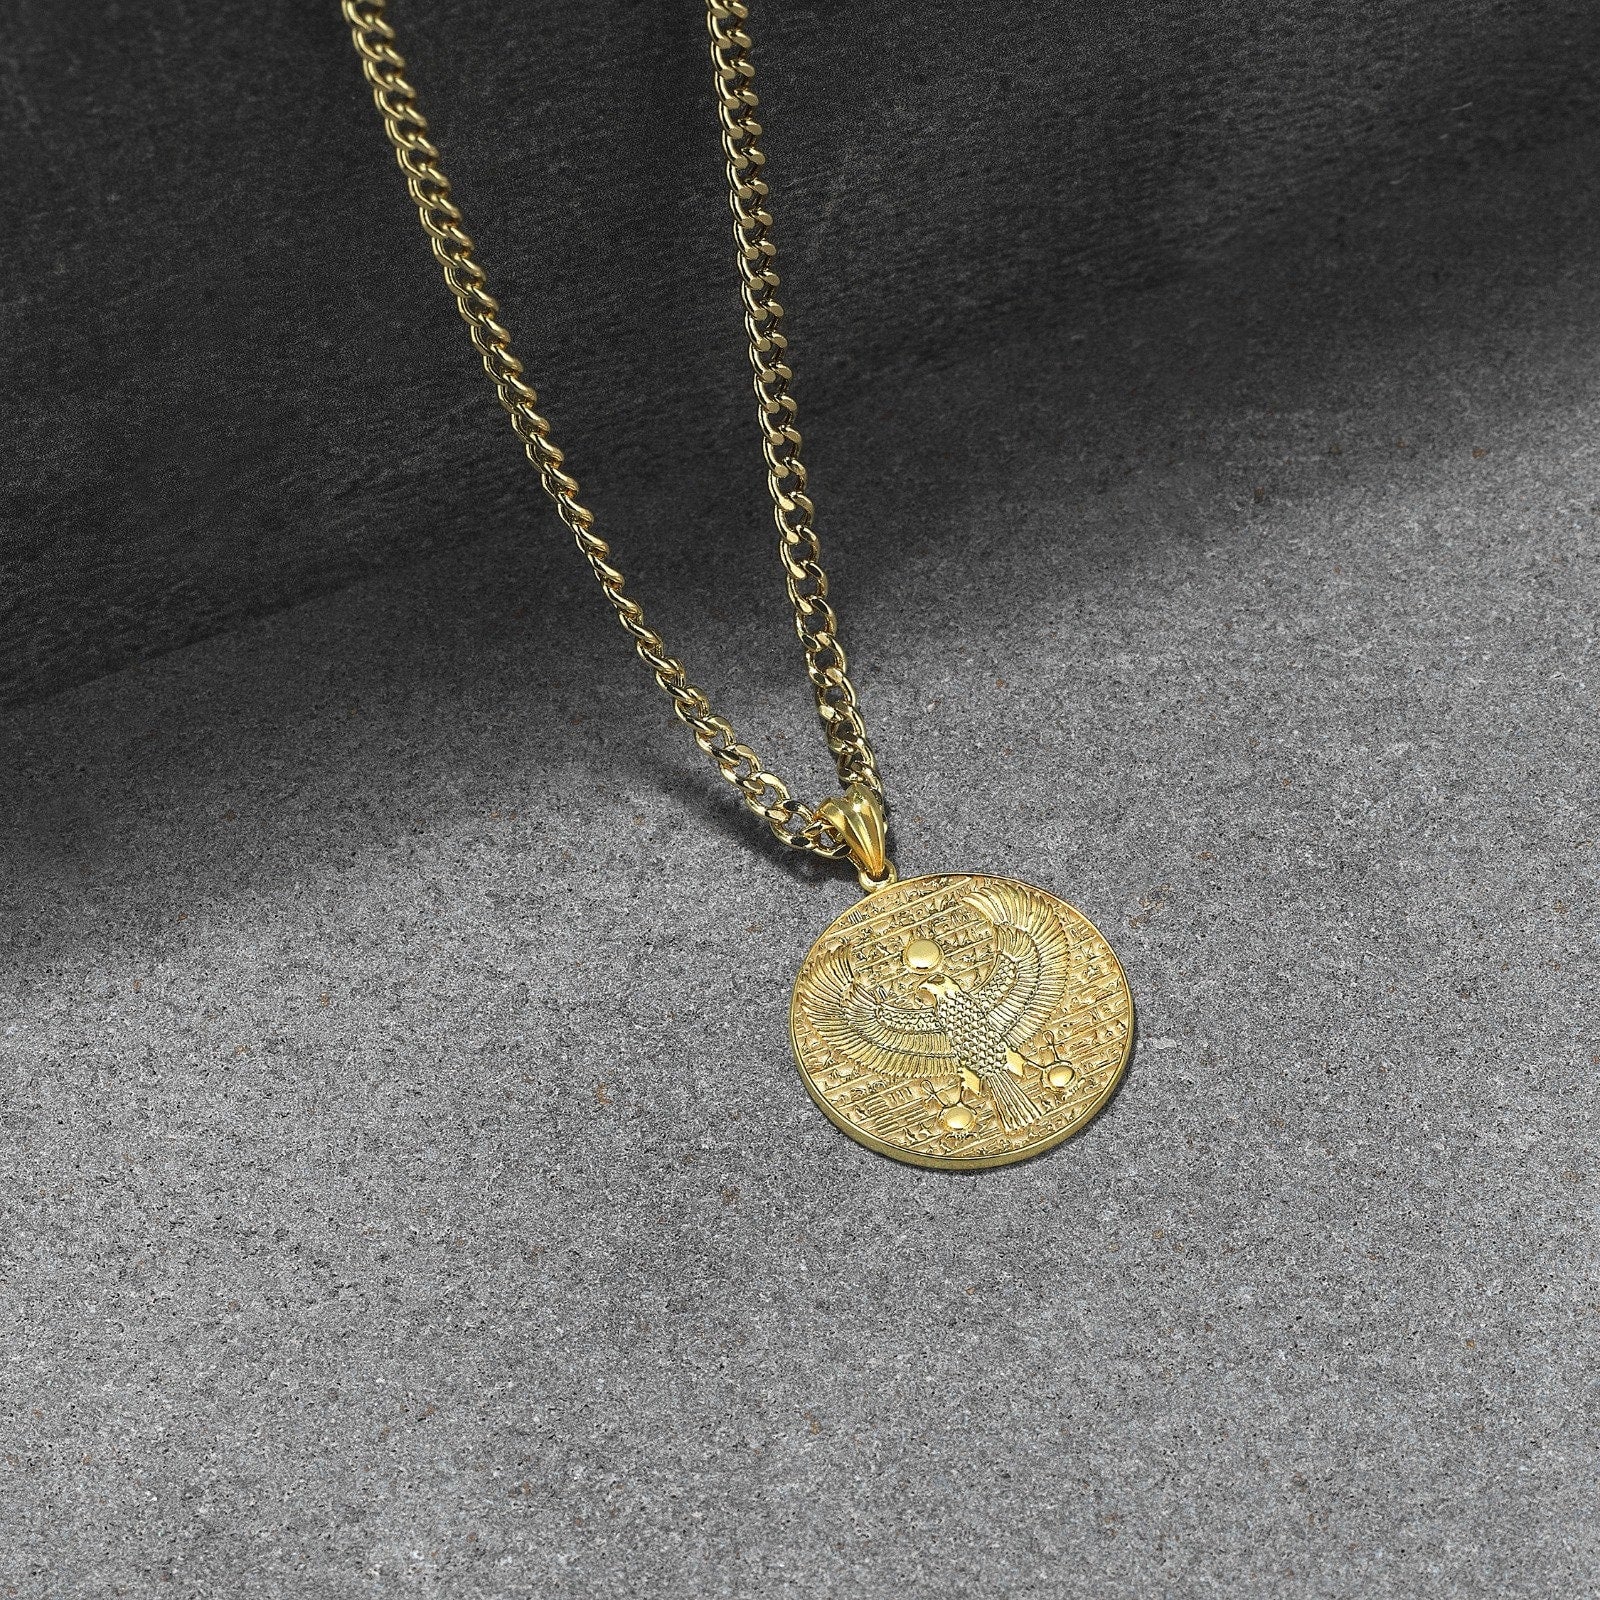 Genuine 18K Gold Phoenix Charm Chain Necklace